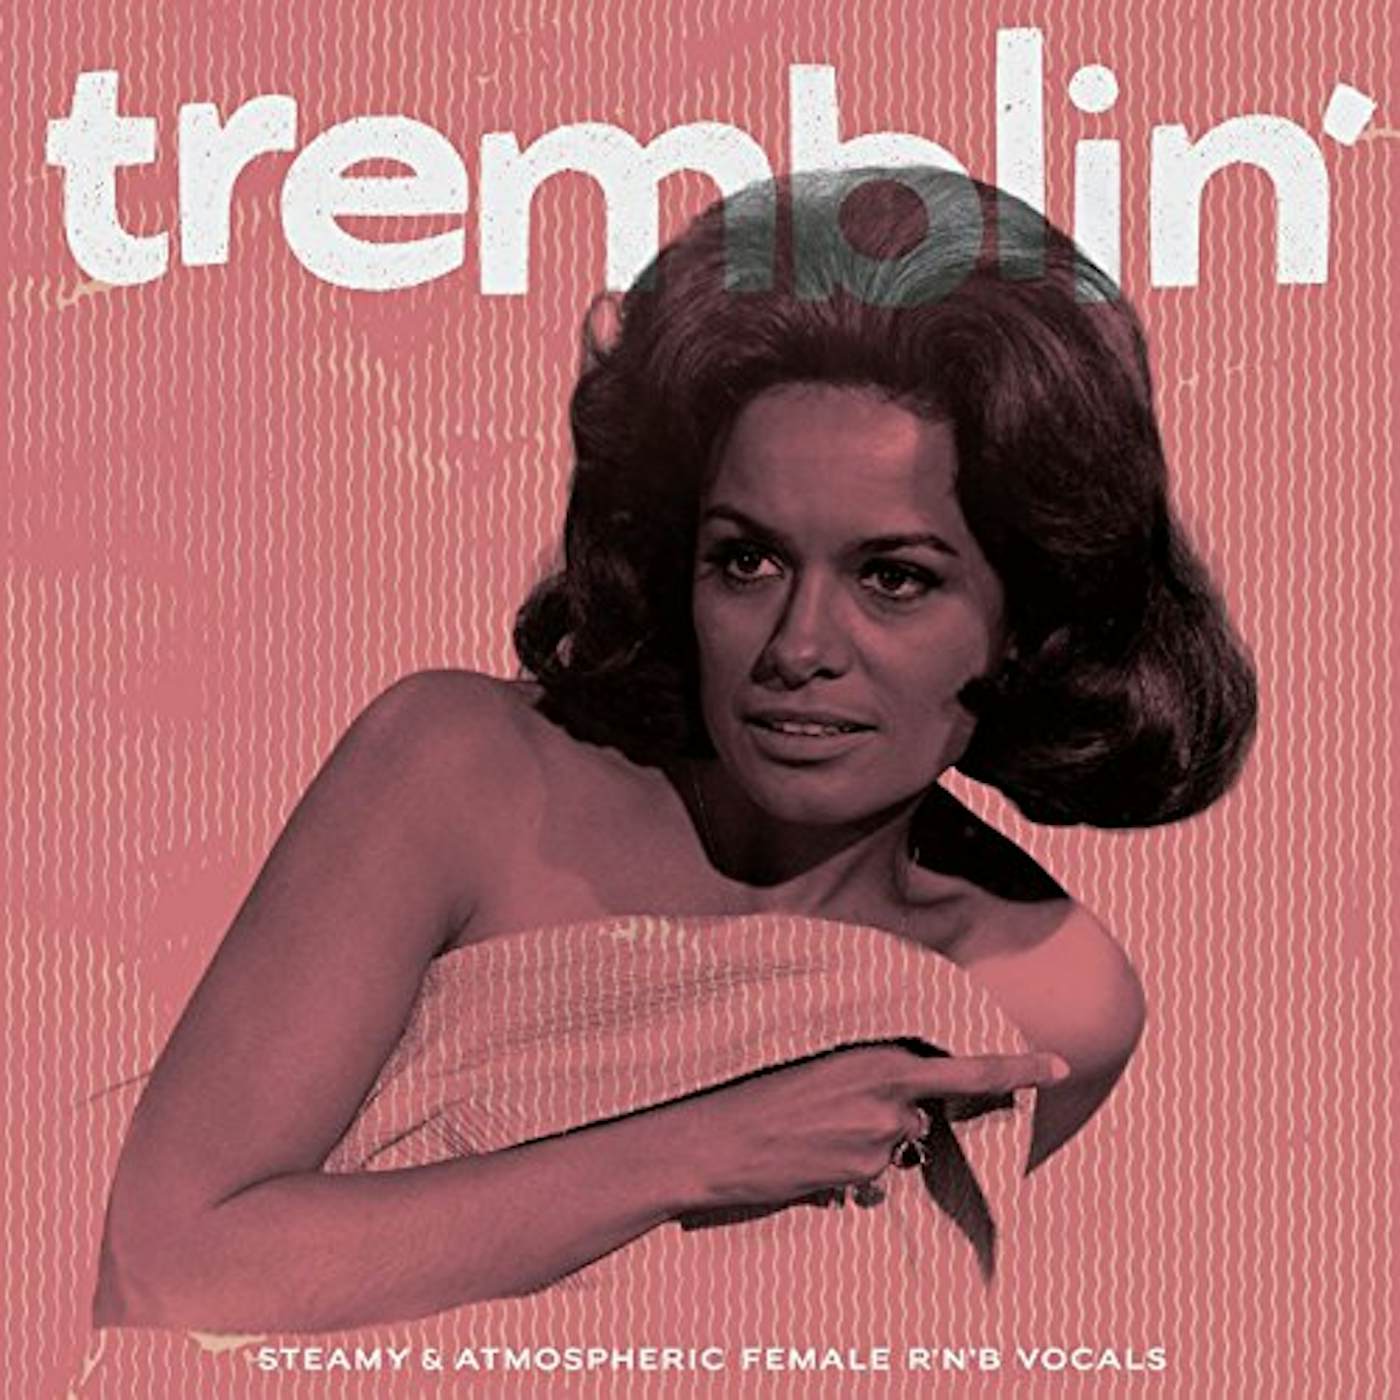 TREMBLIN' - STEAMY & ATMOSPHERIC FEMALE / VARIOUS Vinyl Record